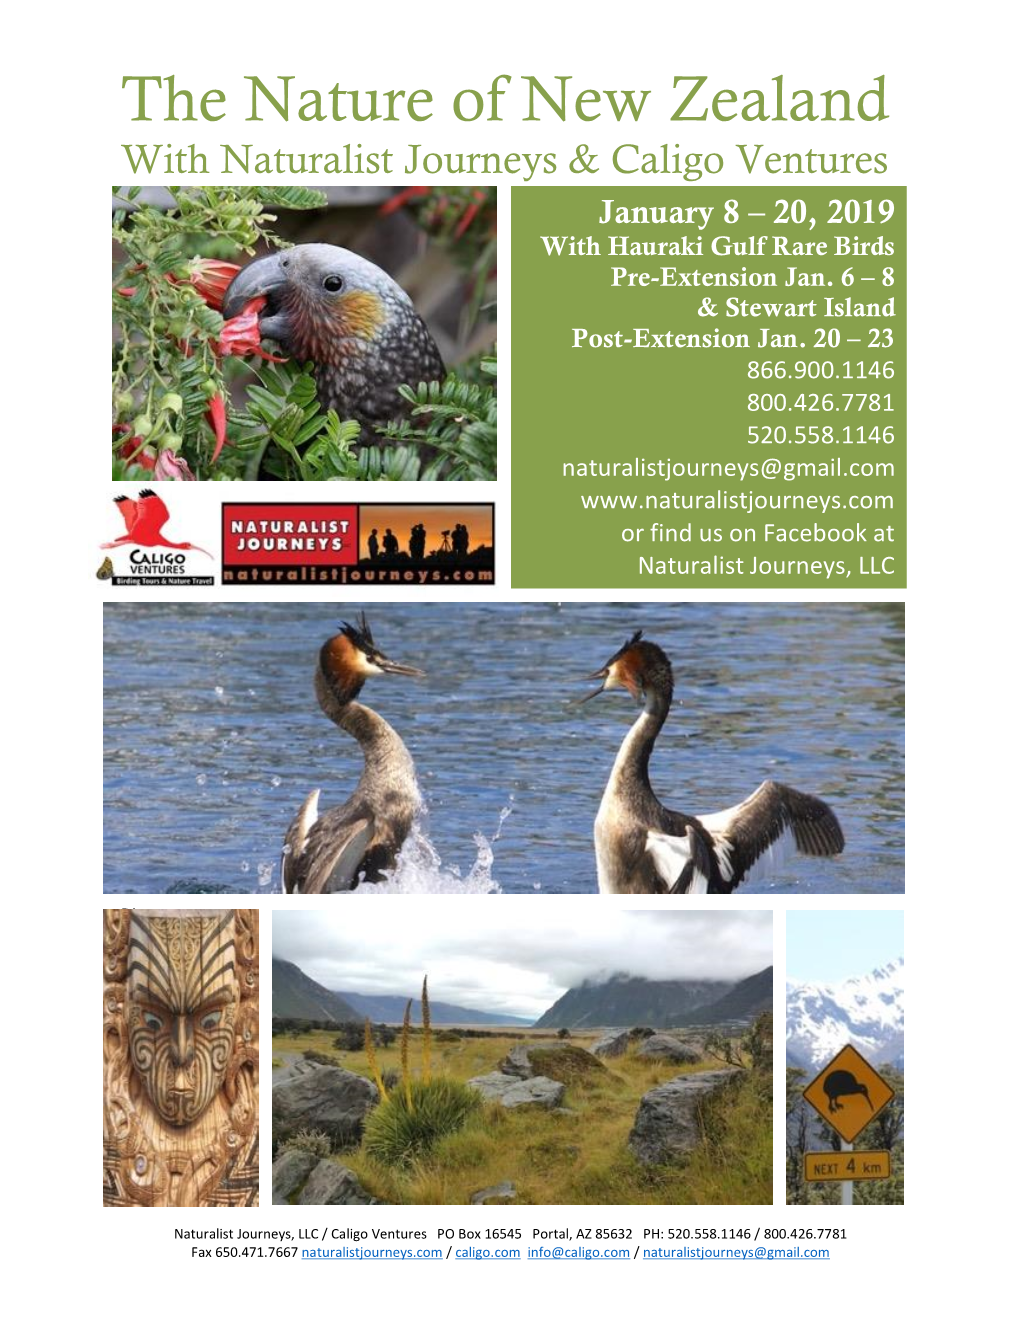 The Nature of New Zealand with Naturalist Journeys & Caligo Ventures January 8 – 20, 2019 with Hauraki Gulf Rare Birds Pre-Extension Jan